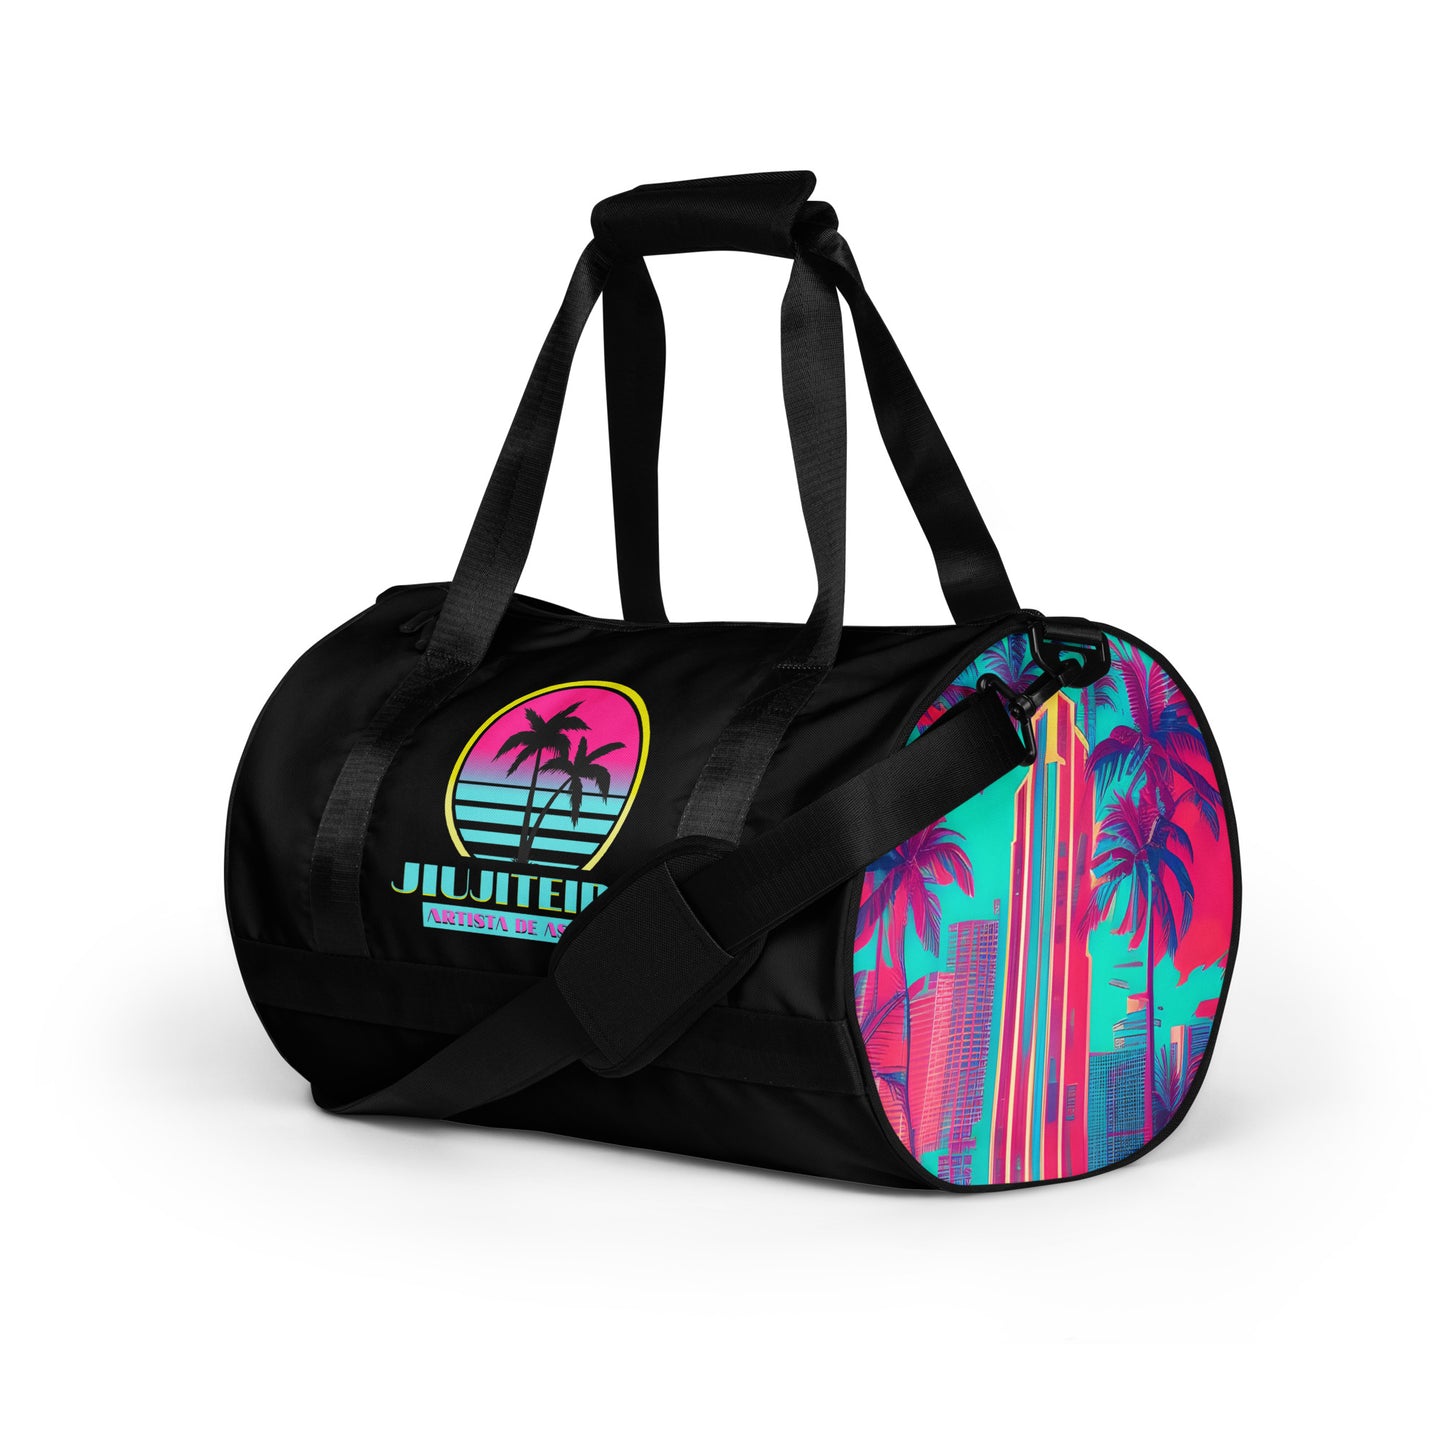 Bolsa de deporte deportiva - Miami Vice Jiujiteira Artista De Asfixia BJJ Duffle Bag